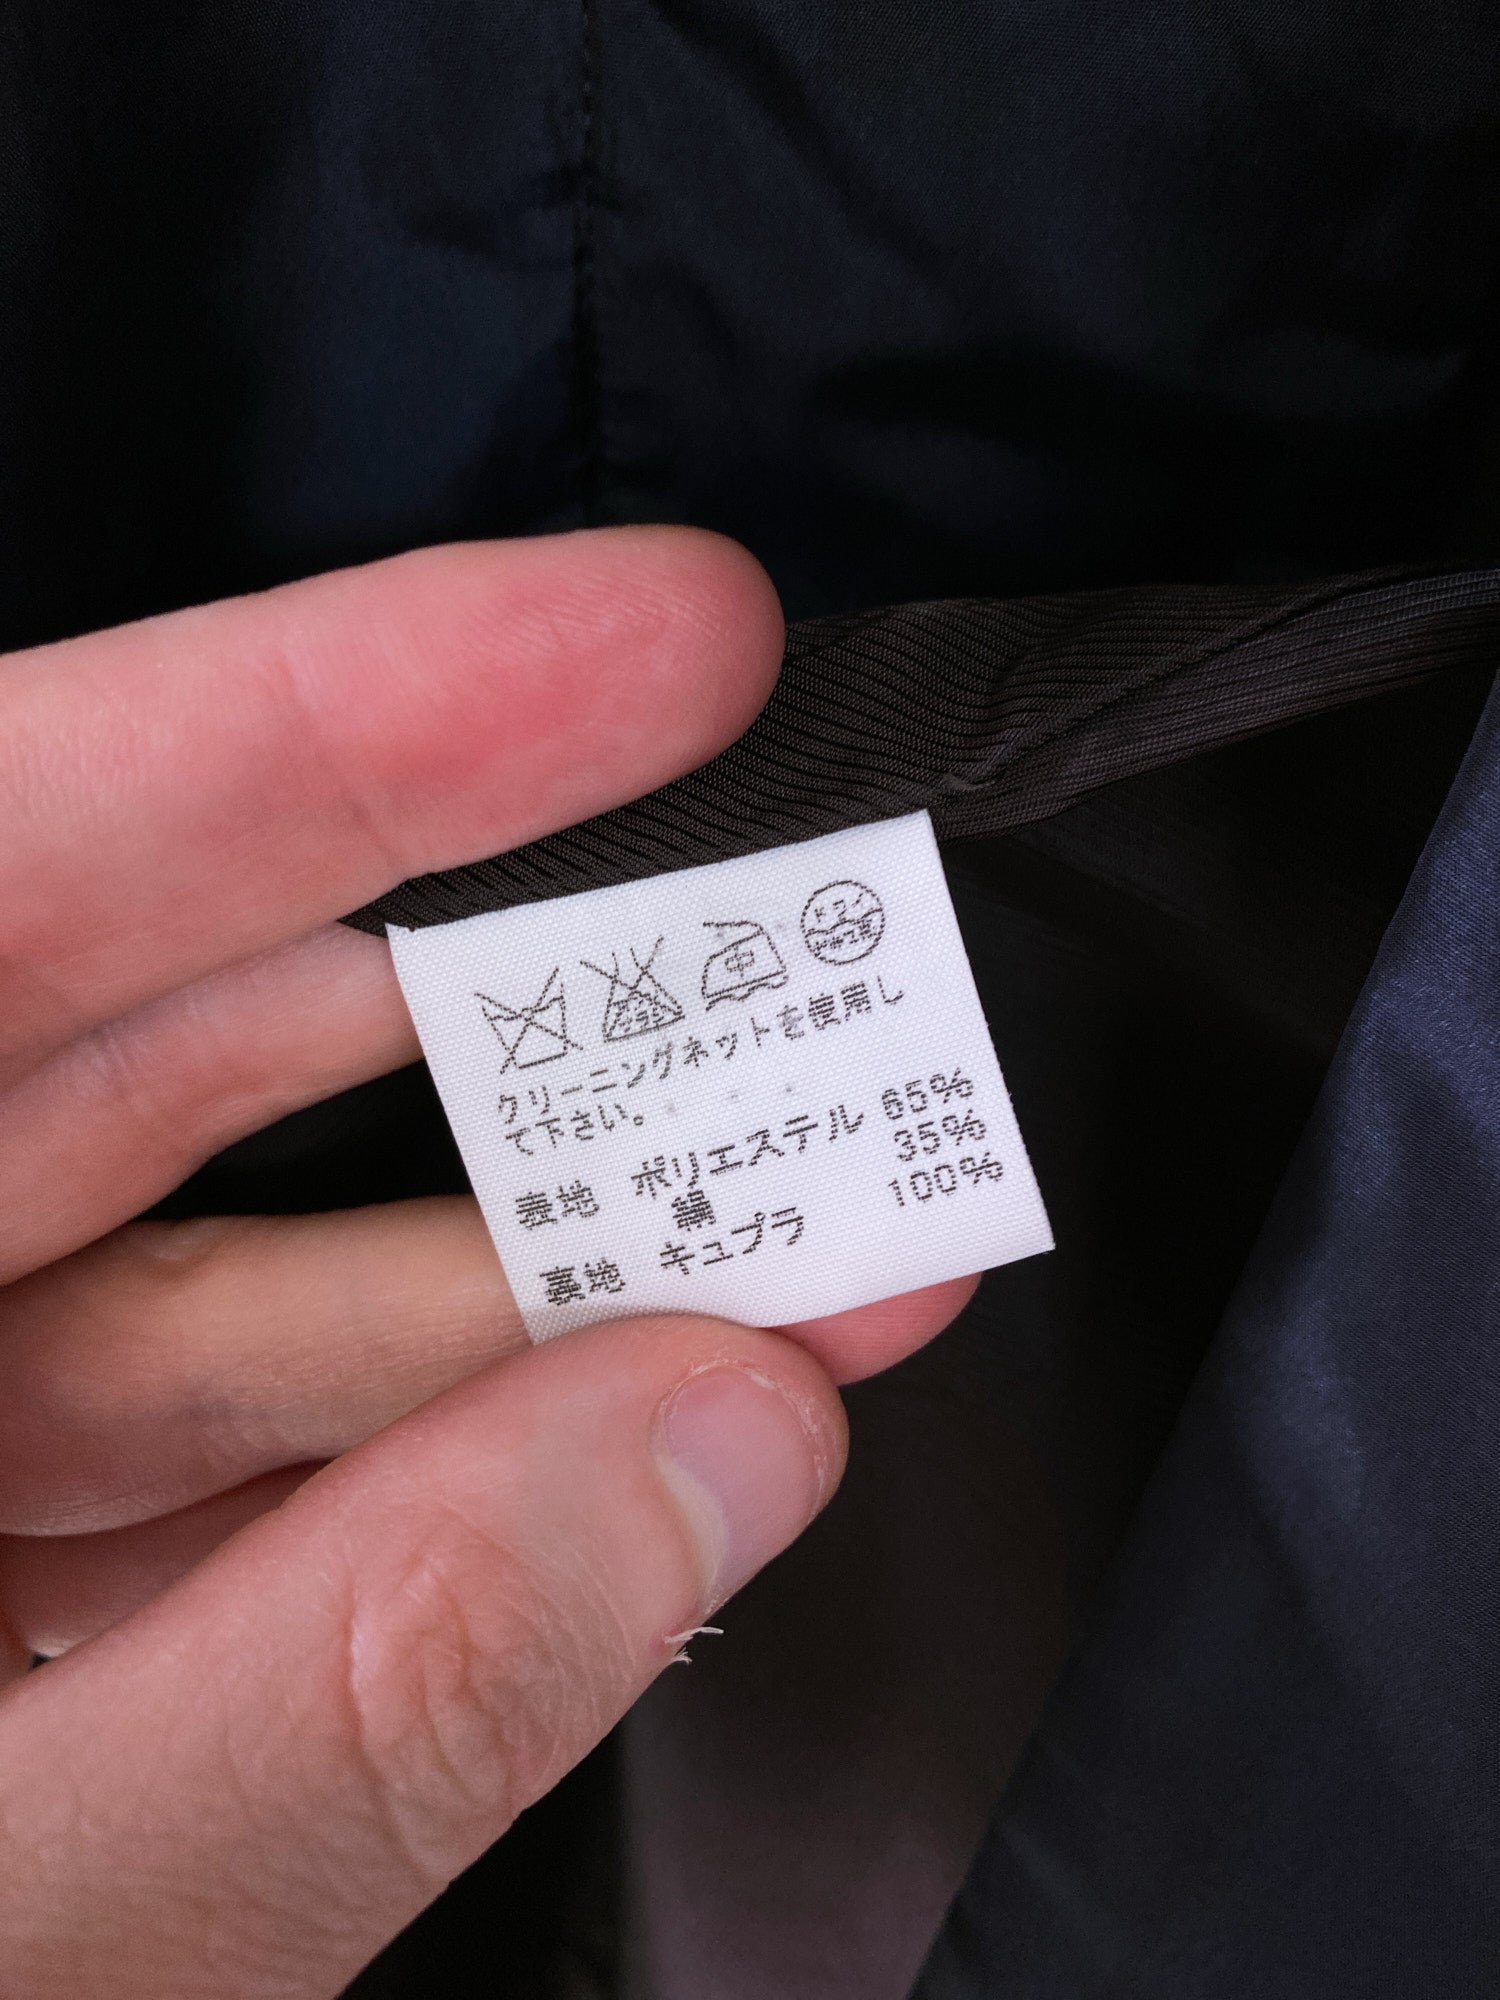 Naoki Takizawa glossy blue poly-silk coat with adjustable sleeves - sz 36